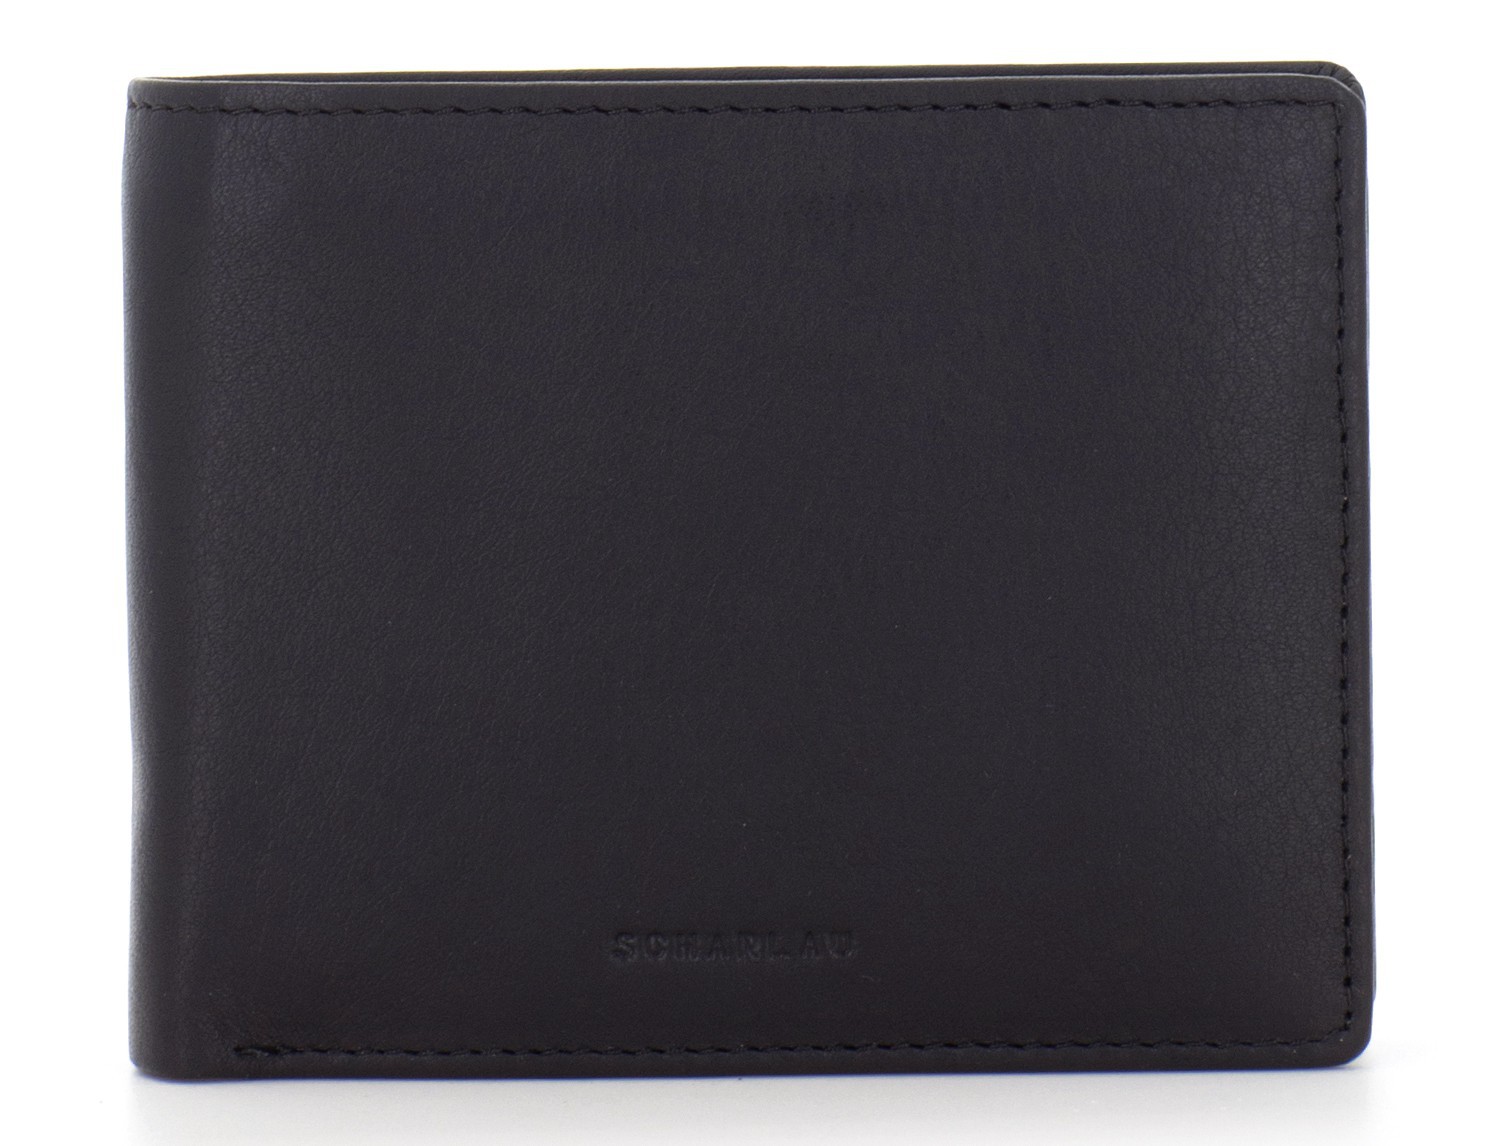 mini leather wallet for men black front